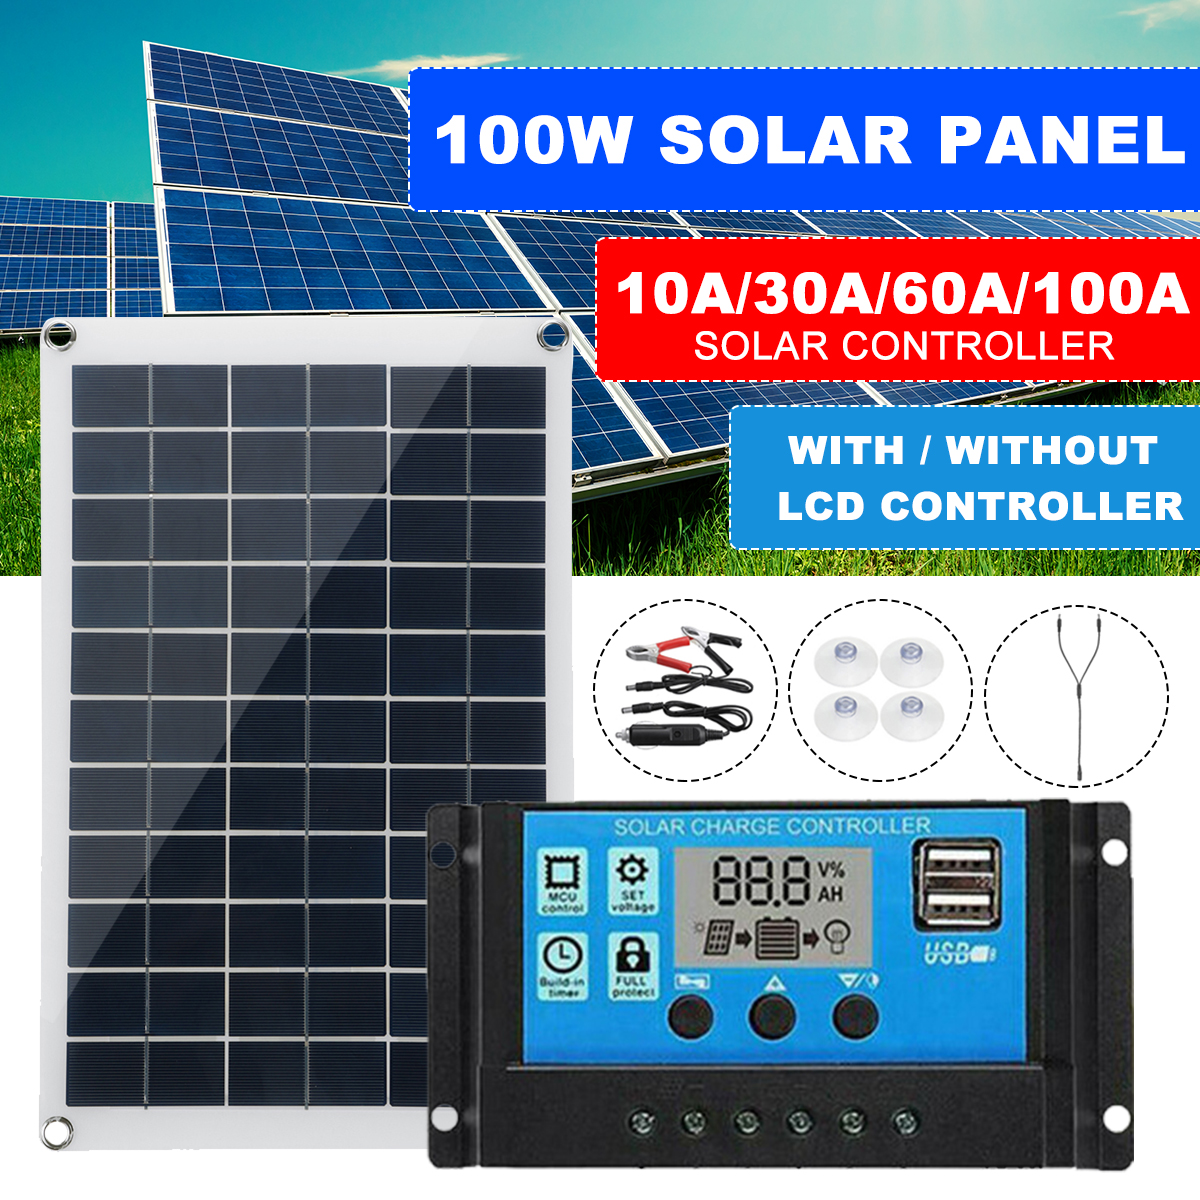 Max-100W-Protable-Solar-Panel-Kit-Dual-DC-USB-Charger-Kit-Single-Crystal-Semi-flexible-Solar-Power-P-1827862-2